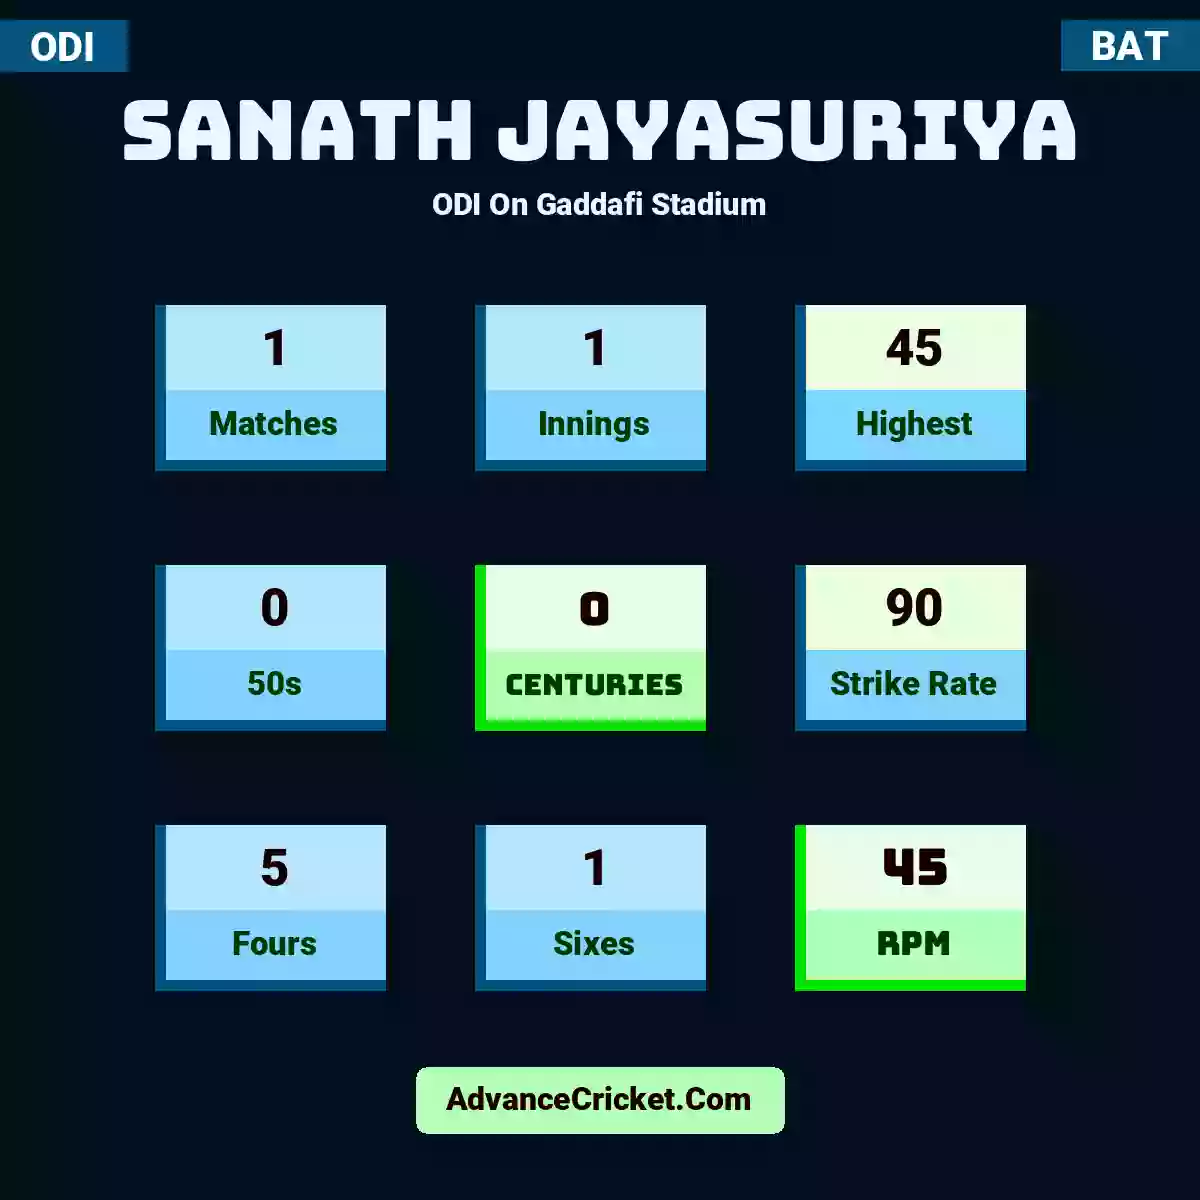 Sanath Jayasuriya ODI  On Gaddafi Stadium, Sanath Jayasuriya played 1 matches, scored 45 runs as highest, 0 half-centuries, and 0 centuries, with a strike rate of 90. S.Jayasuriya hit 5 fours and 1 sixes, with an RPM of 45.